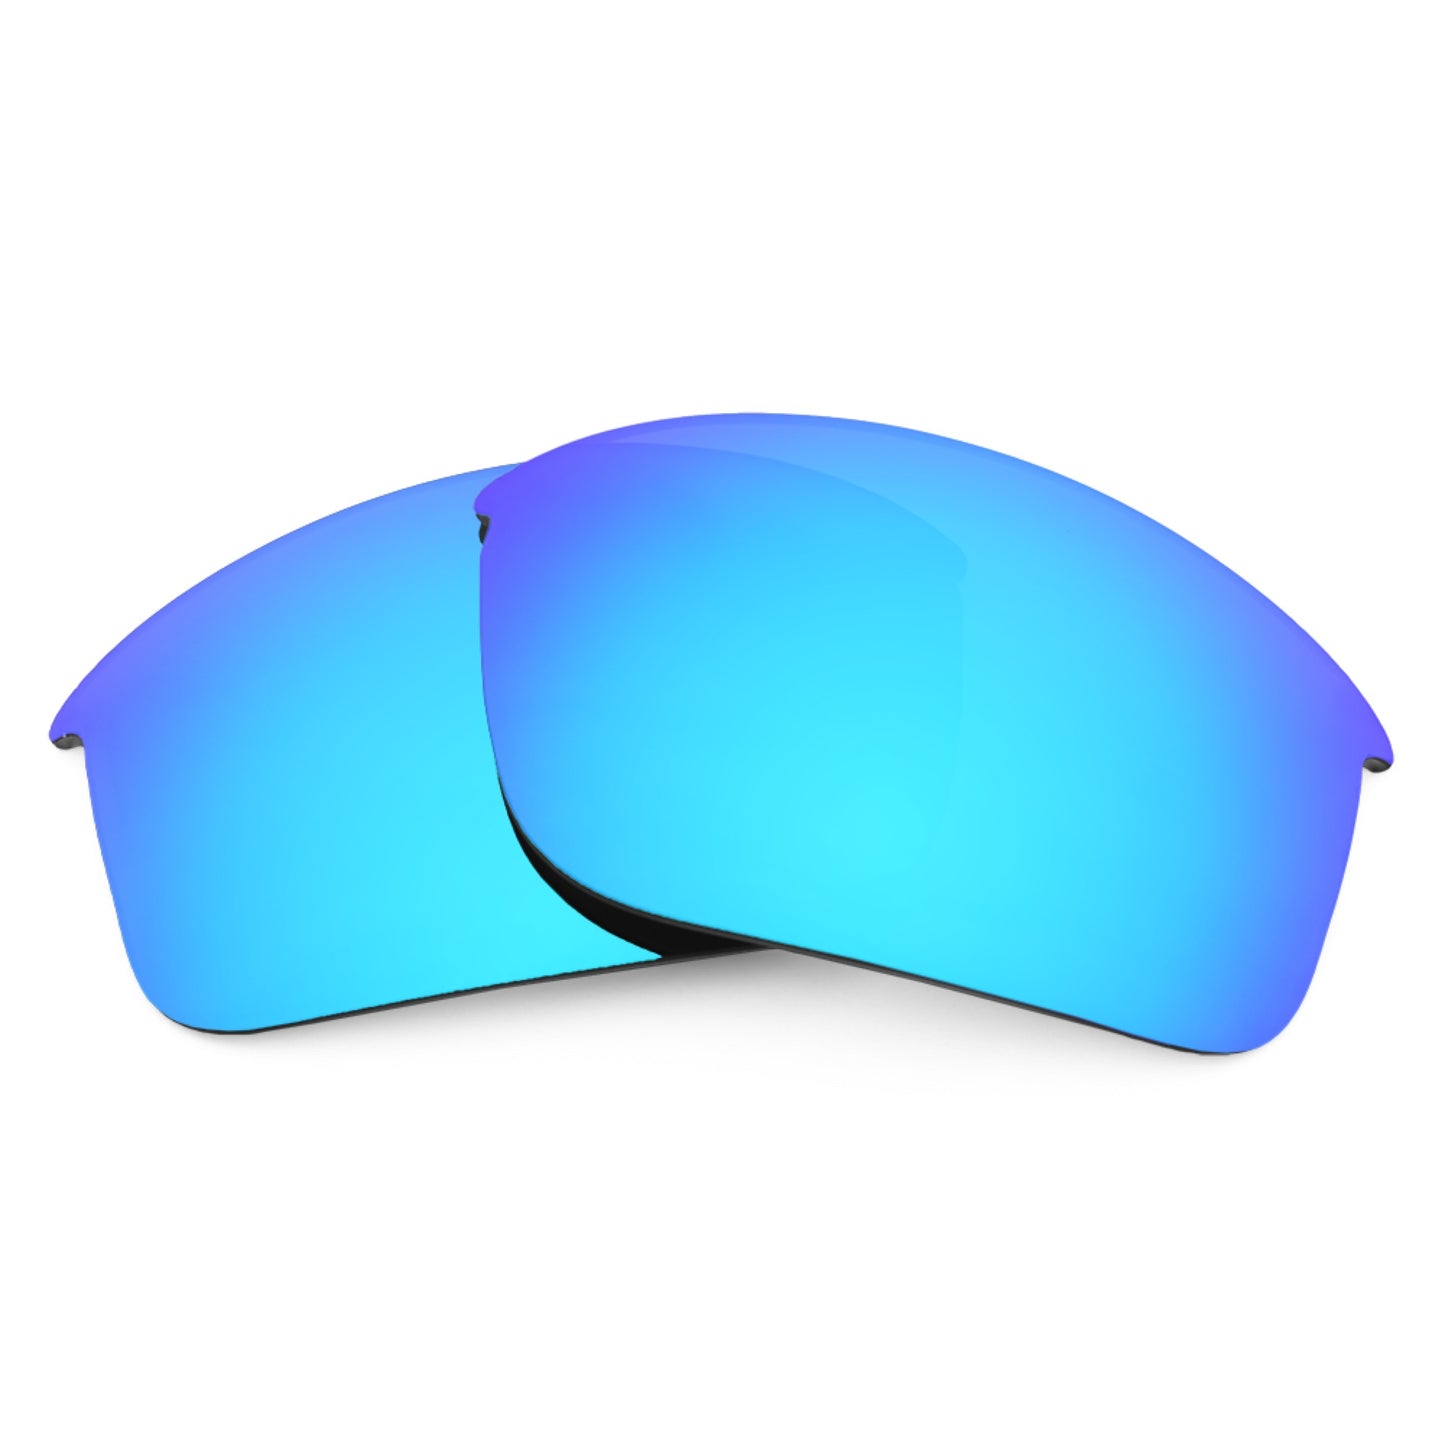 Revant replacement lenses for Oakley Sliver Edge (Low Bridge Fit) Non-Polarized Ice Blue